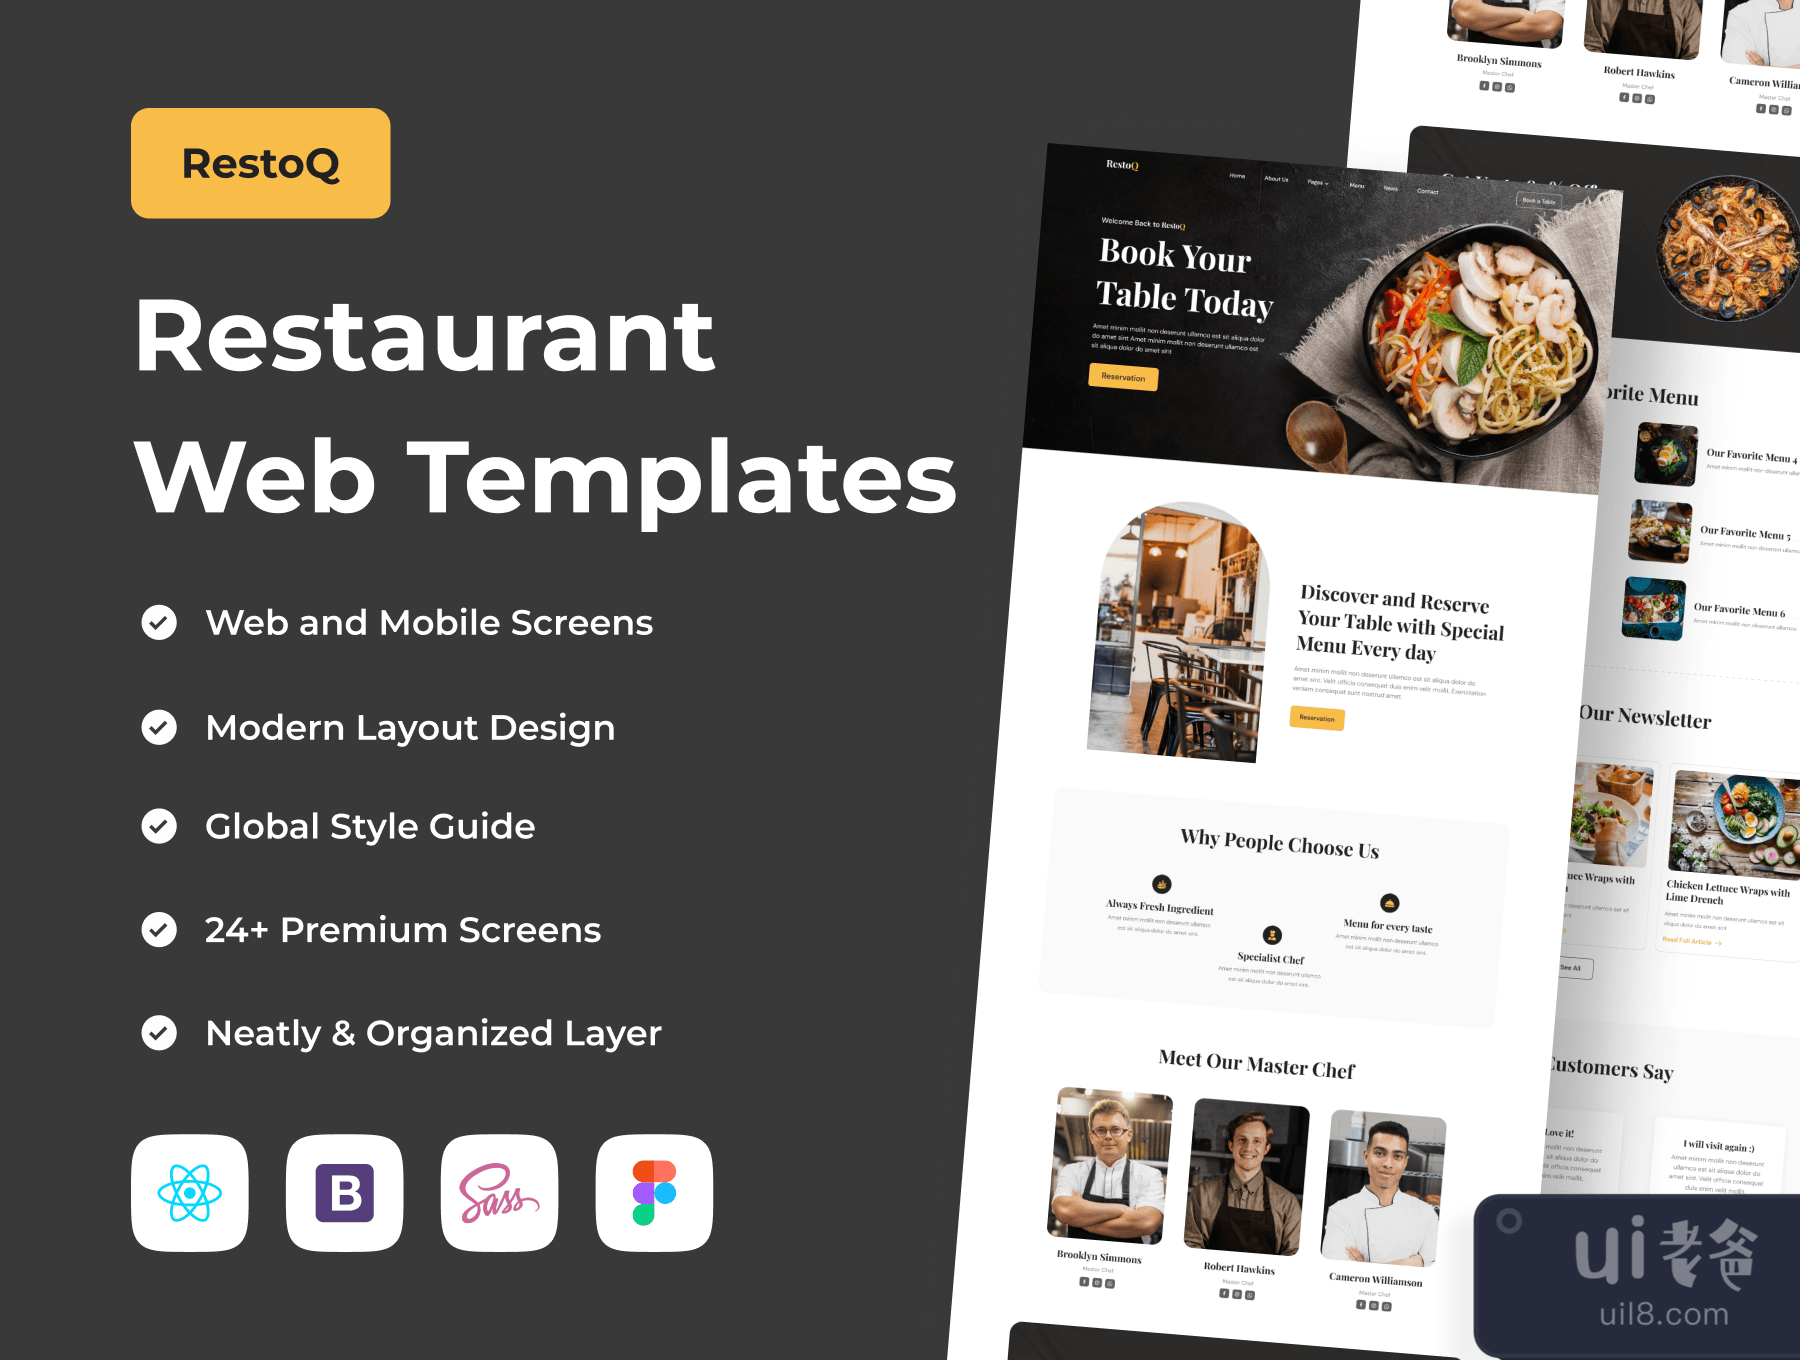 RestoQ - 餐厅网页模板(RestoQ - Restaurant Web Templates)插图7